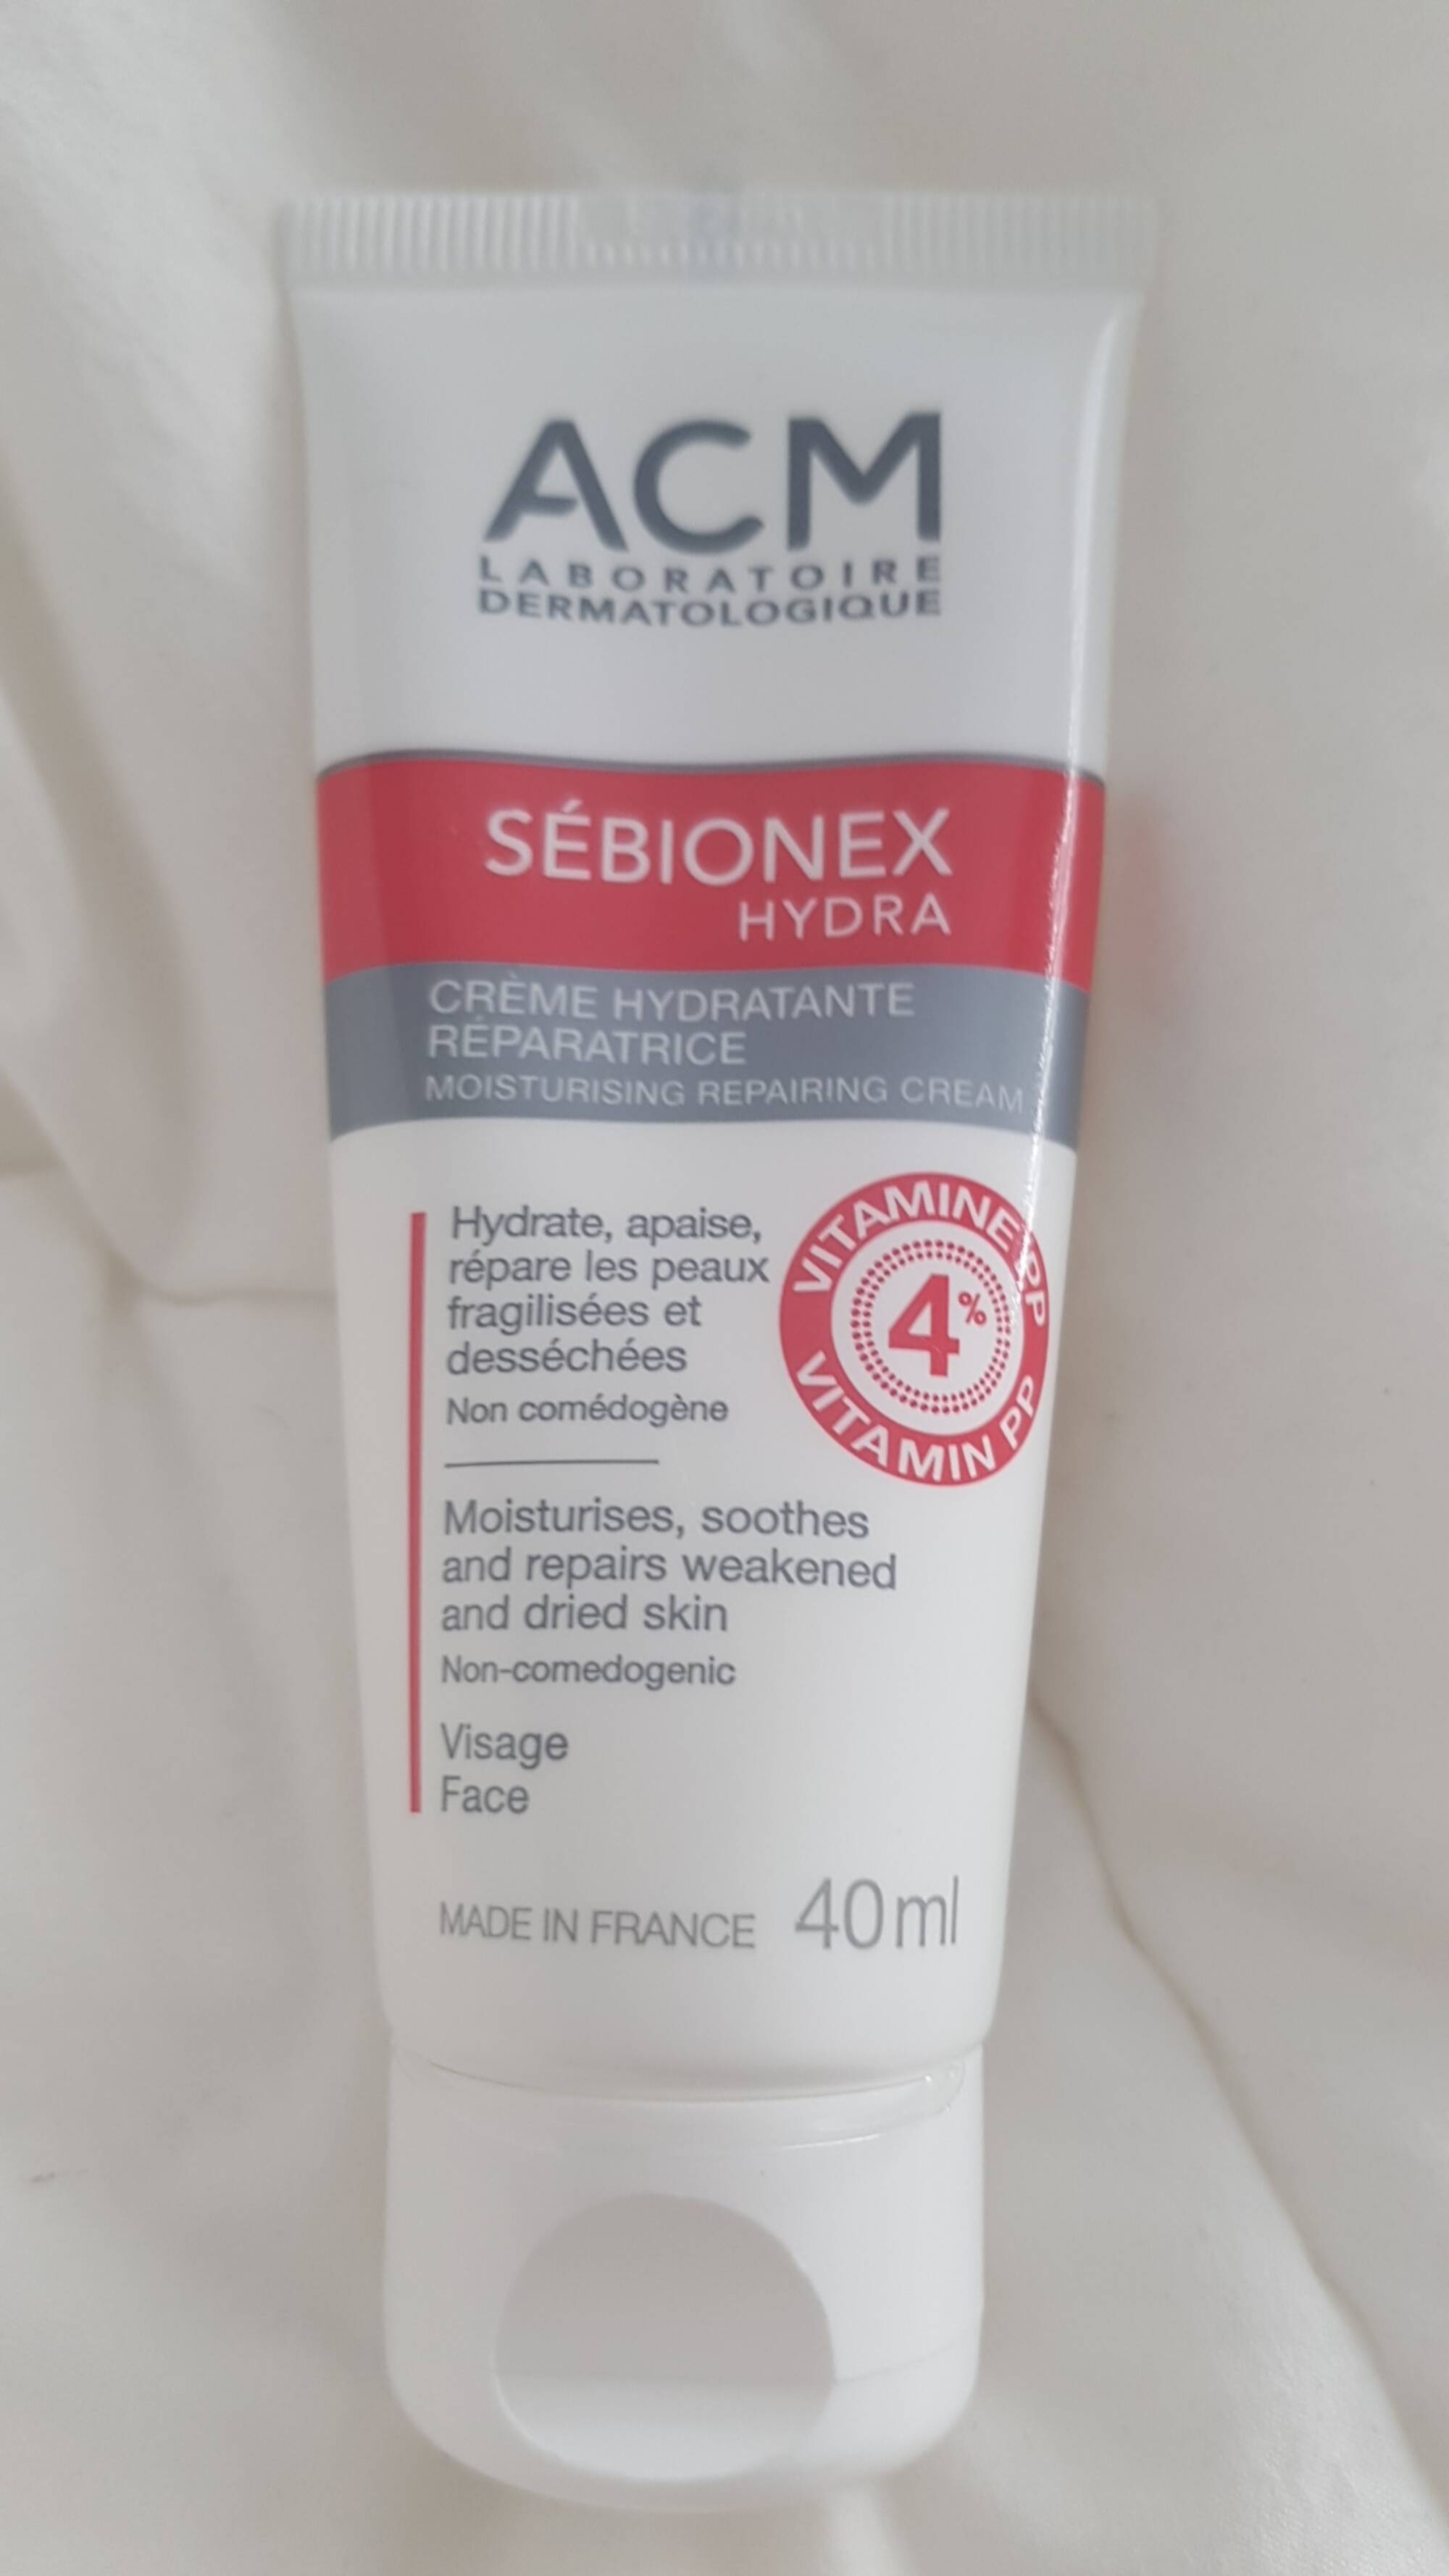 ACM - Sébionex hydra - Crème hydratante reparatrice